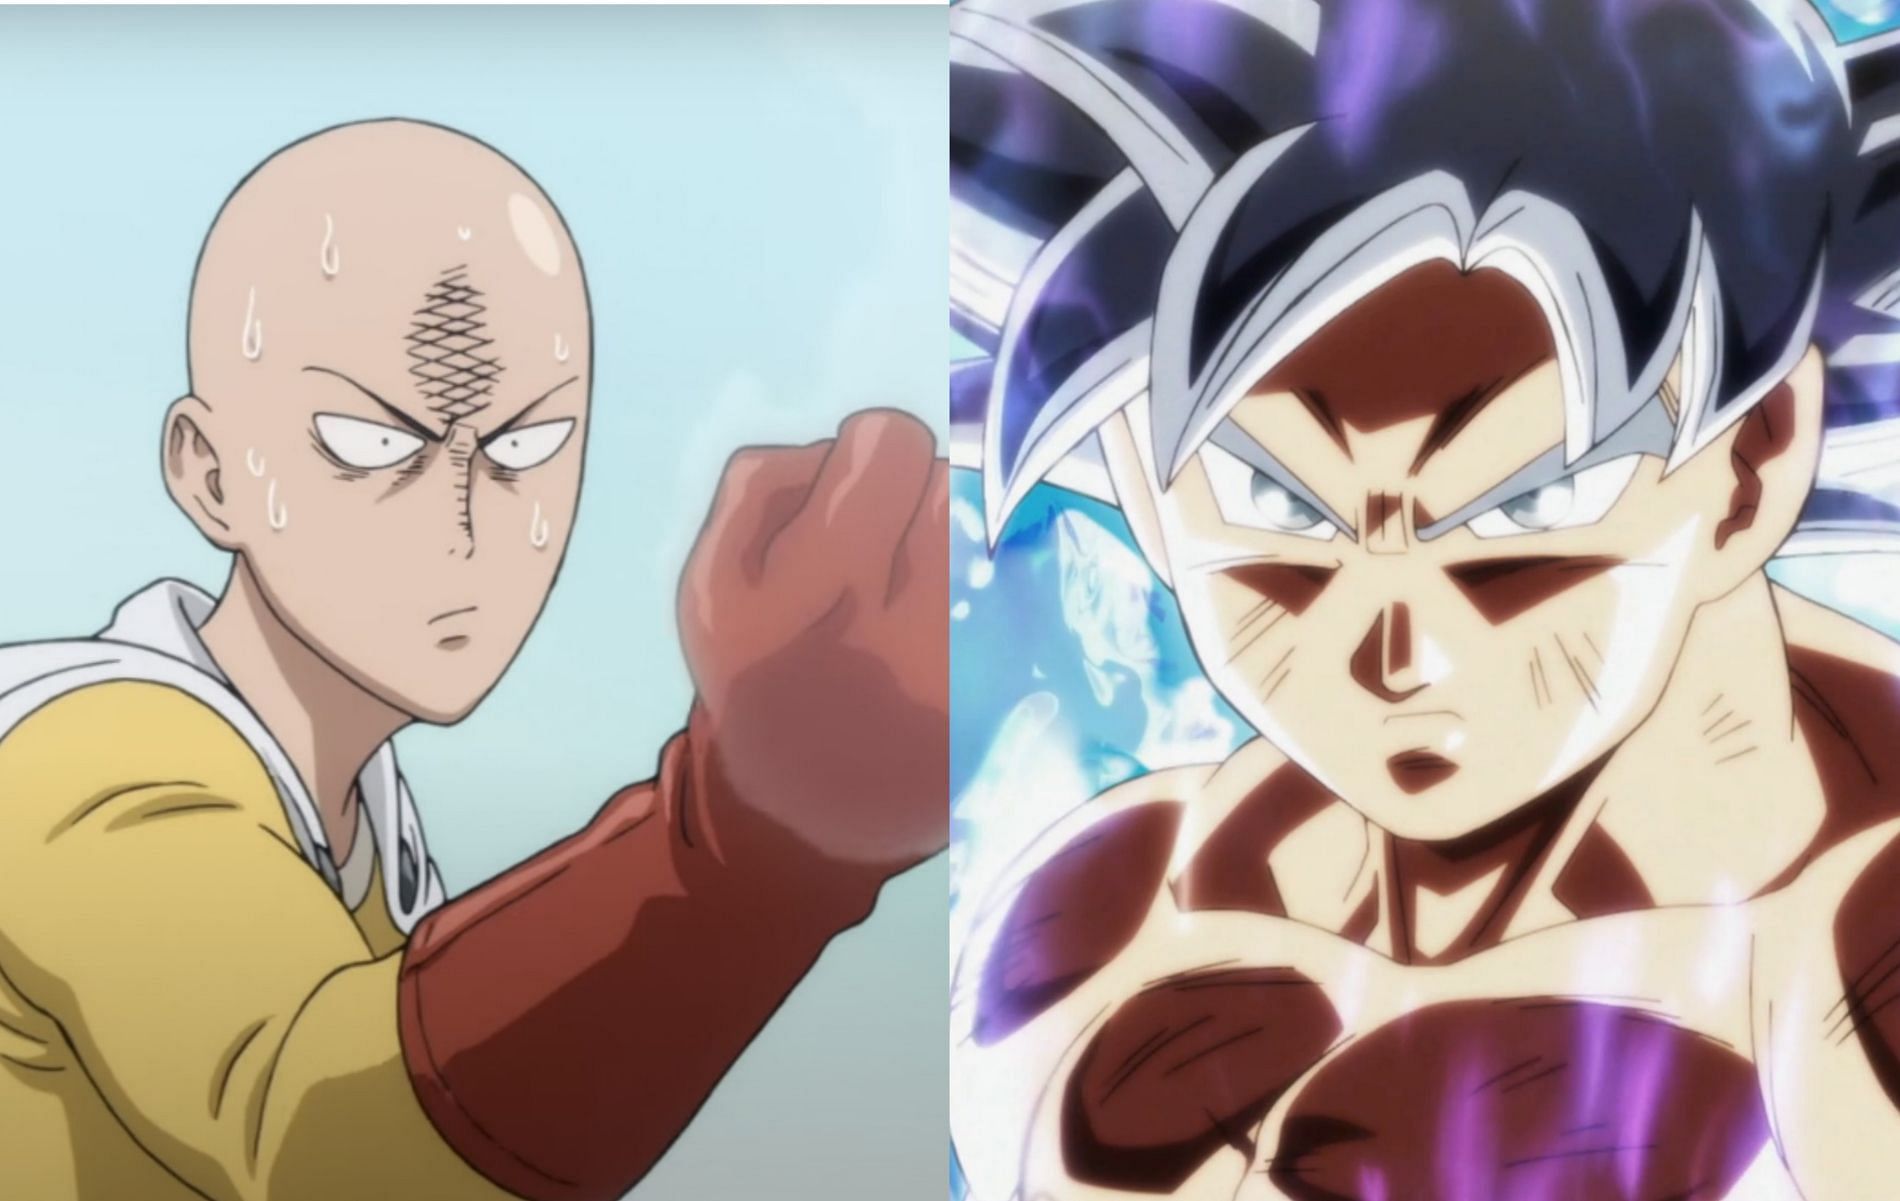 Saitama can now land a punch on Ultra Instinct Goku (Images via One Punch Man and Dragon Ball/Akira Toriyama/Toei Animation)